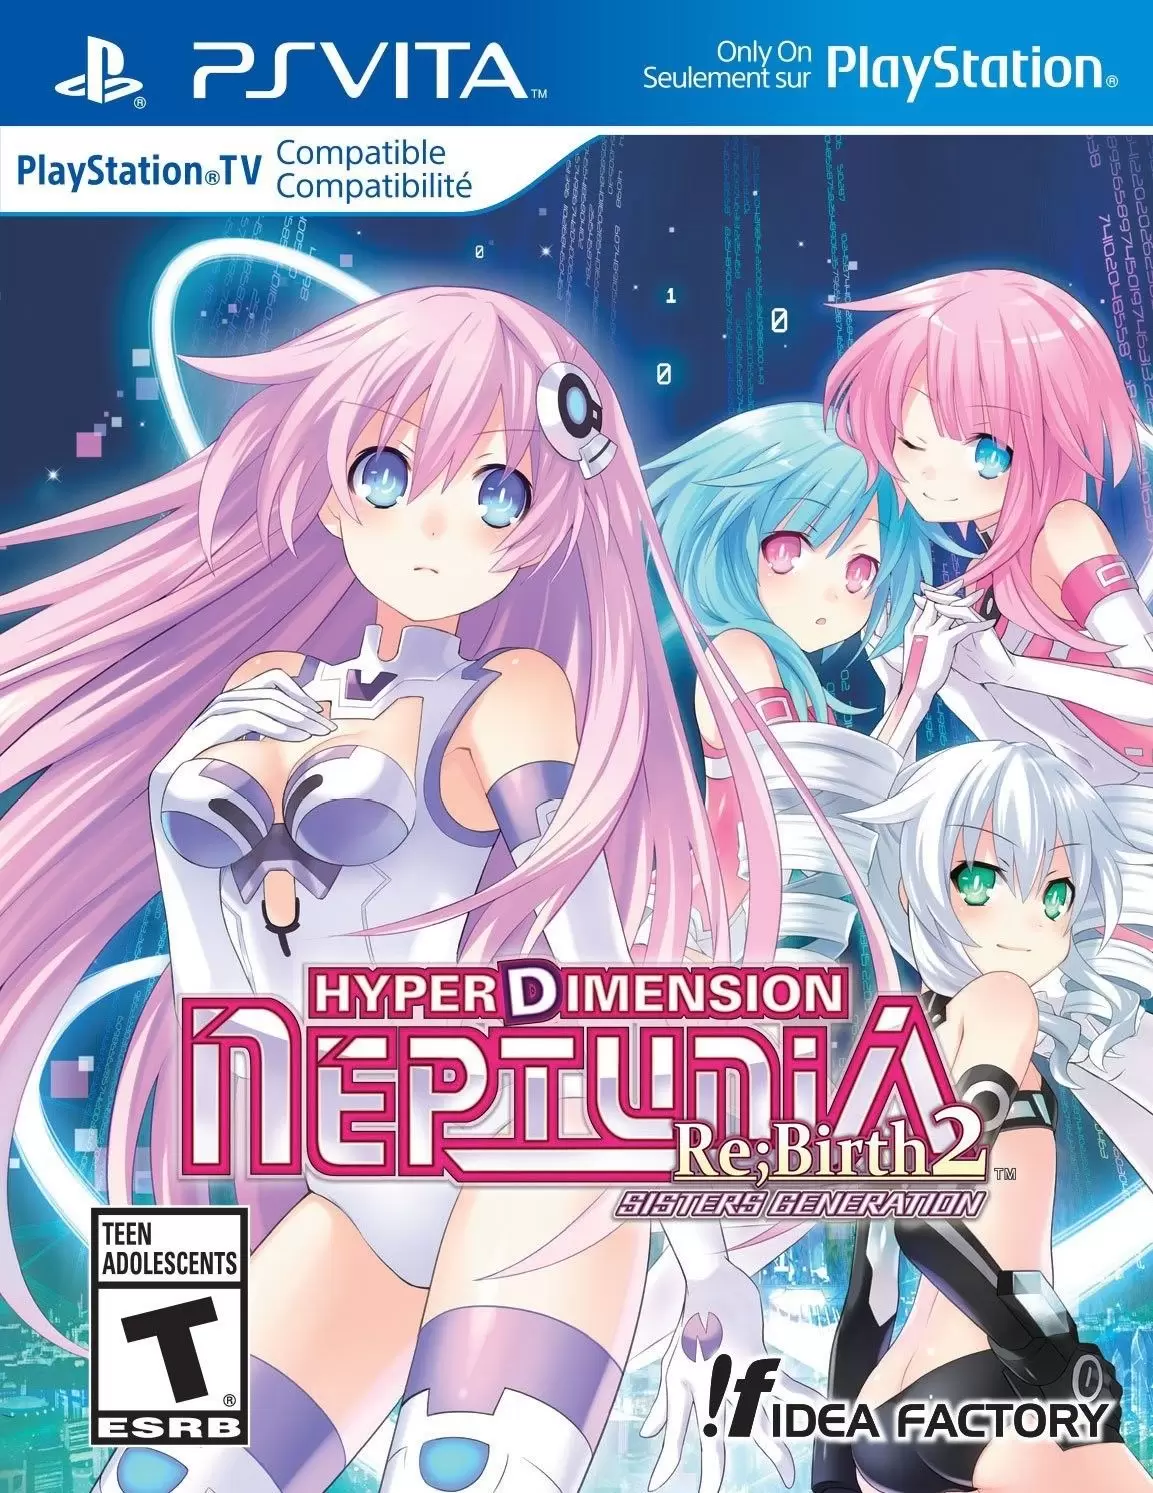 PS Vita Games - Hyperdimension Neptunia ReBirth 2: Sisters Generation